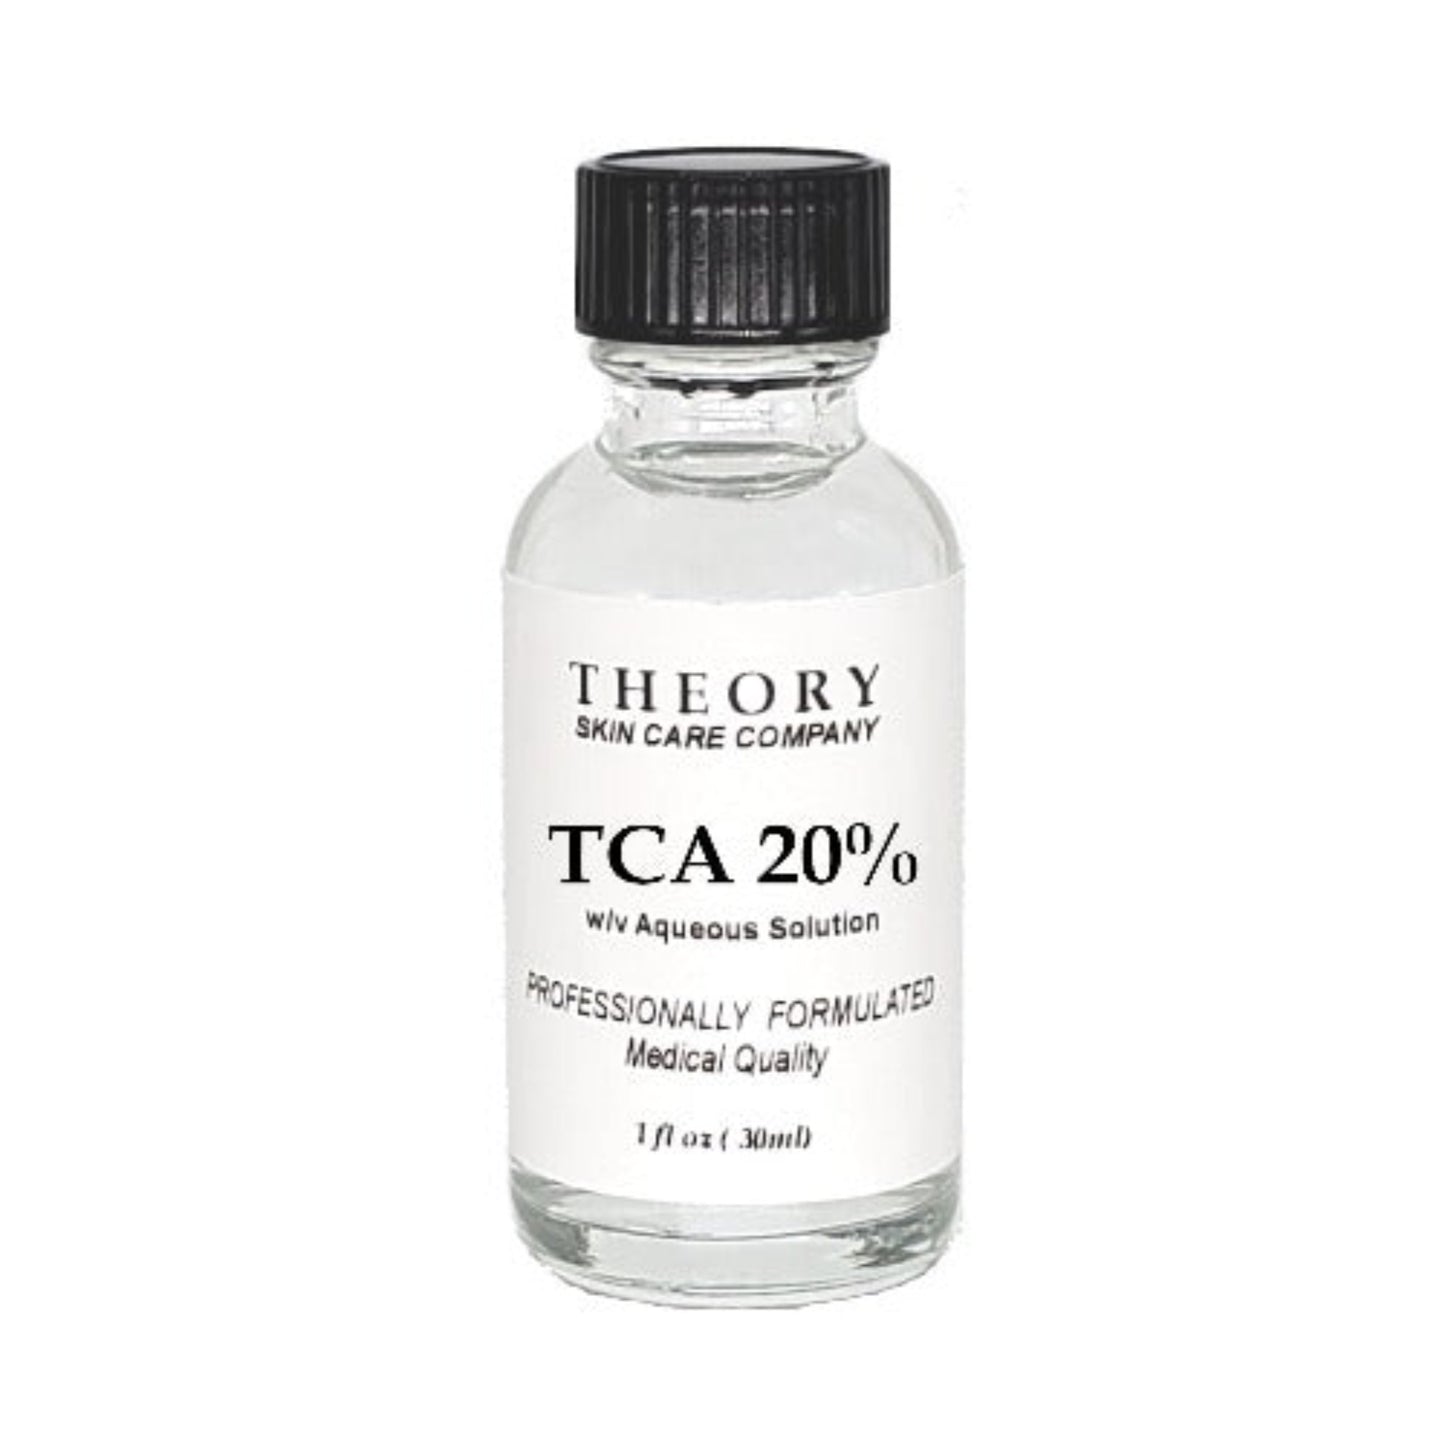 20% TCA, Trichloroacetic Acid | At Home Chemical Peel